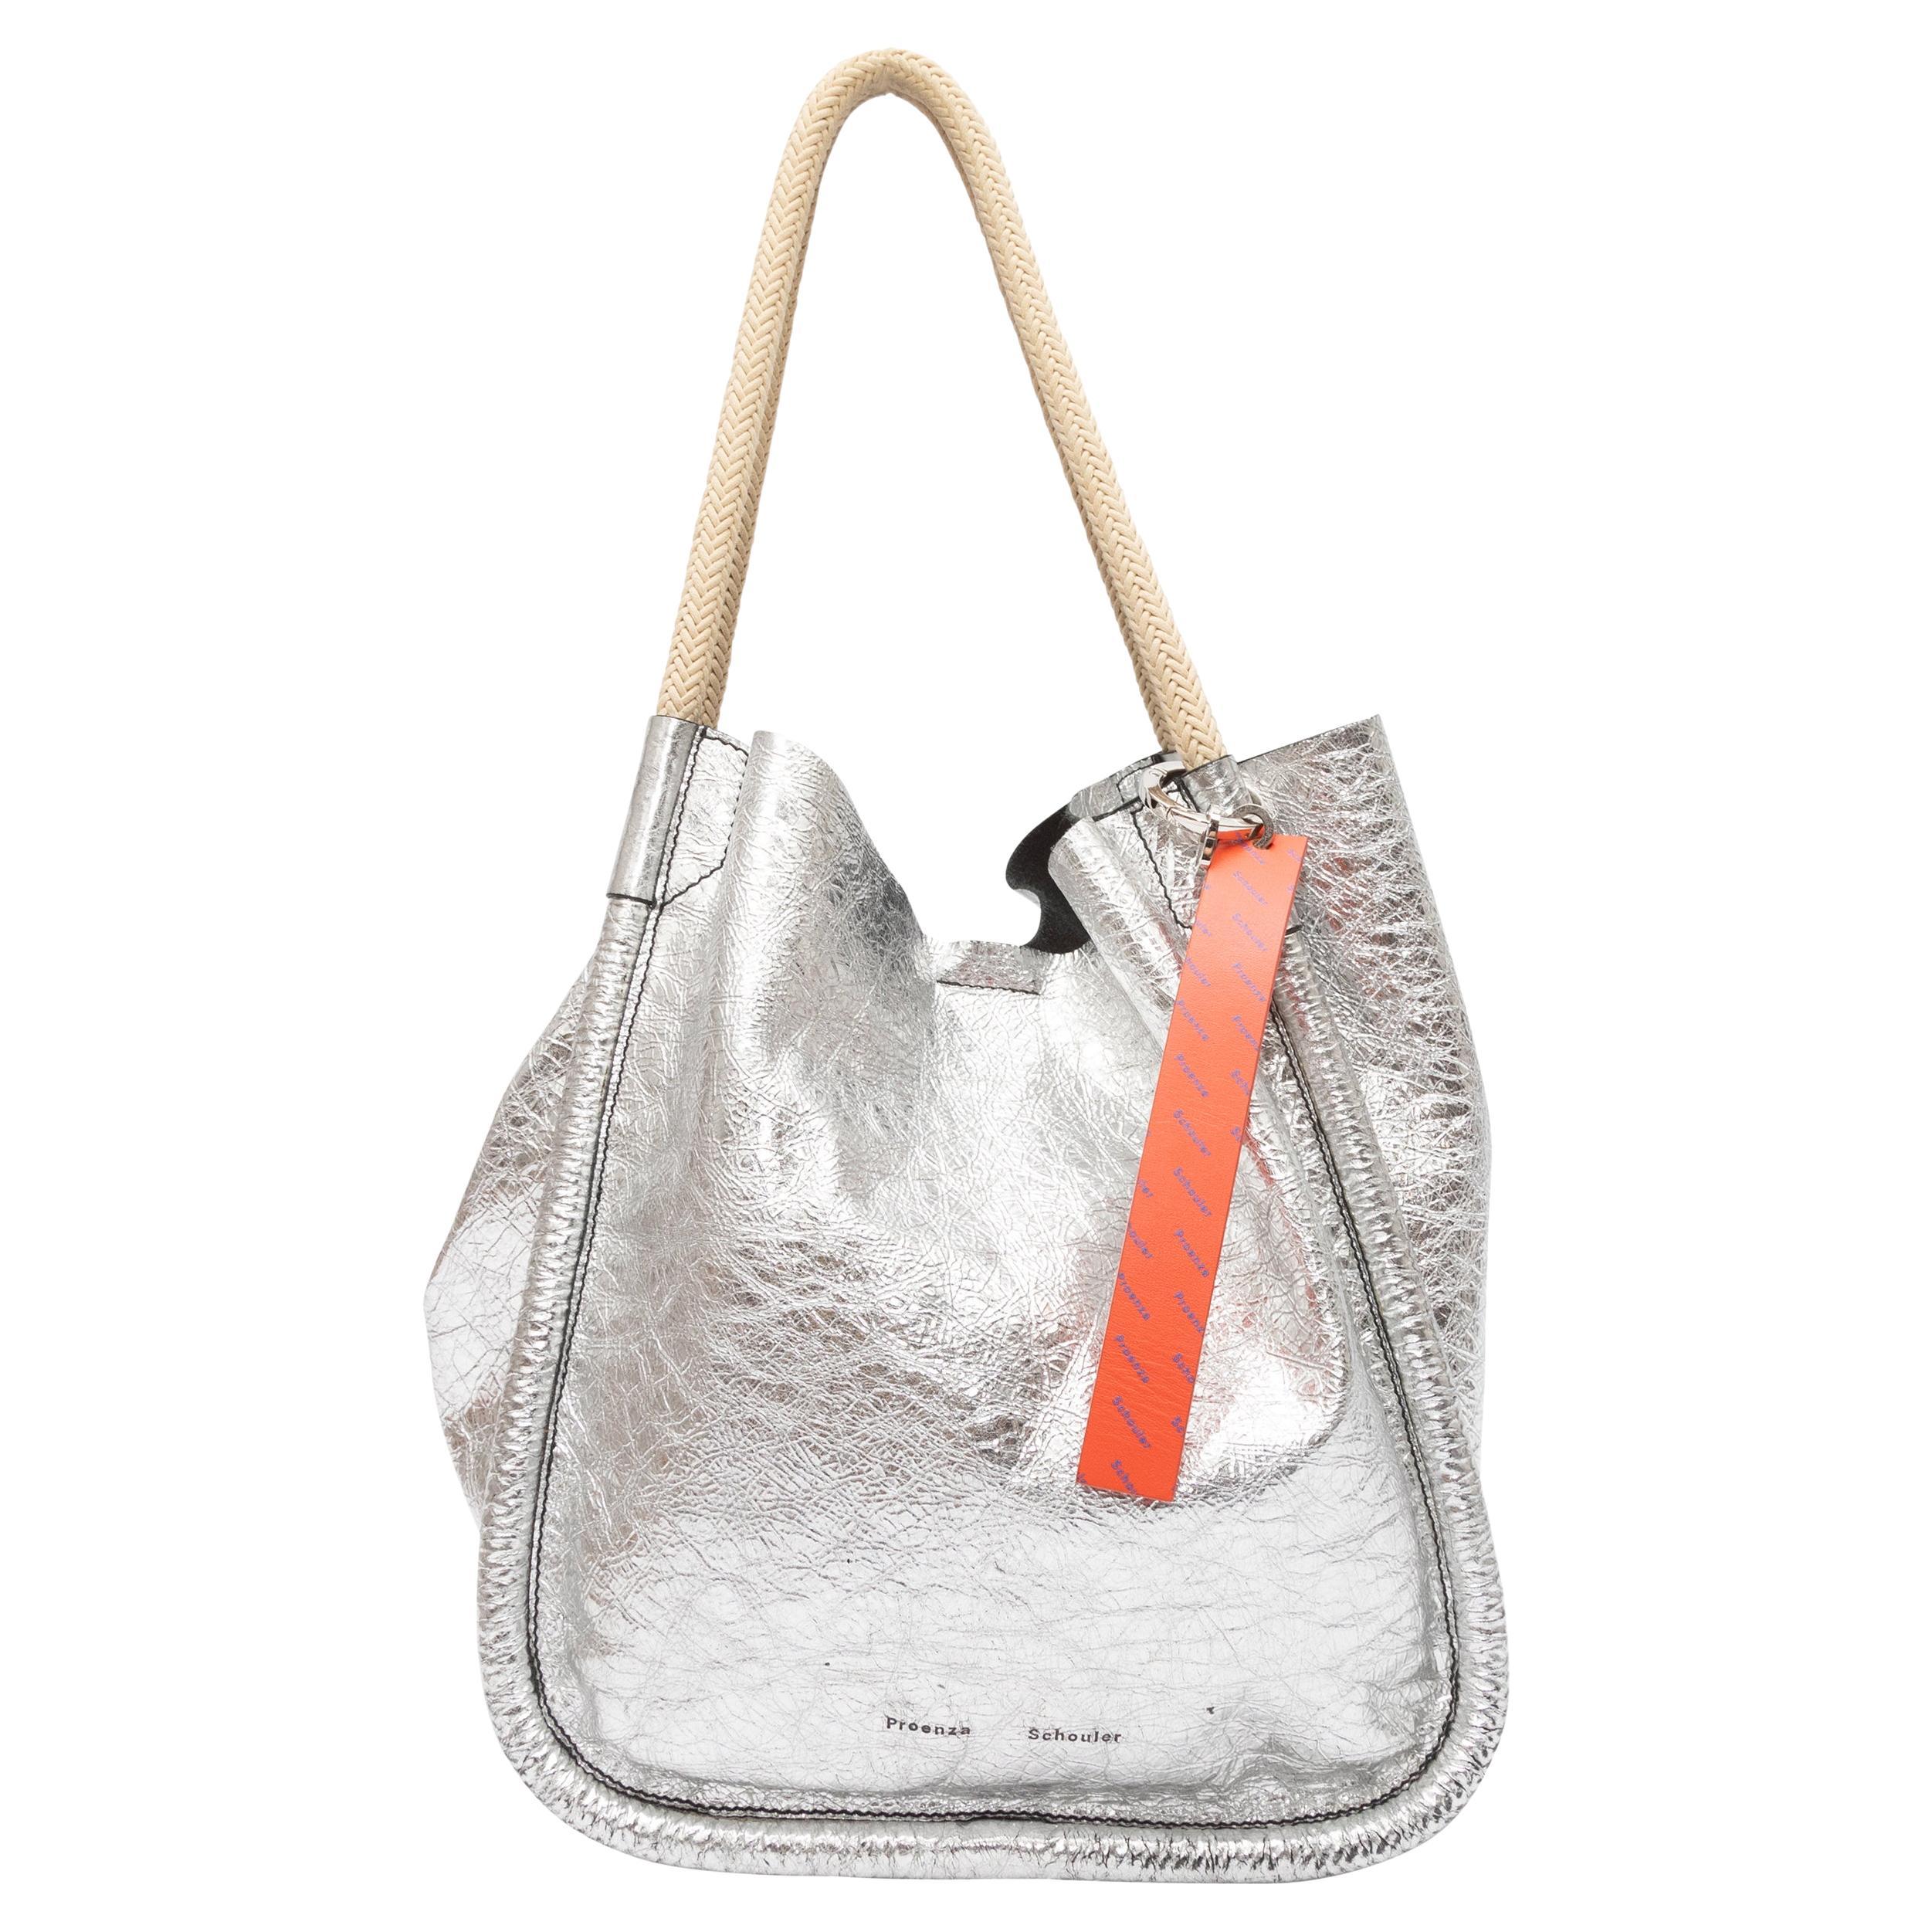 Proenza Schouler Silver Metallic Leather Shoulder Bag